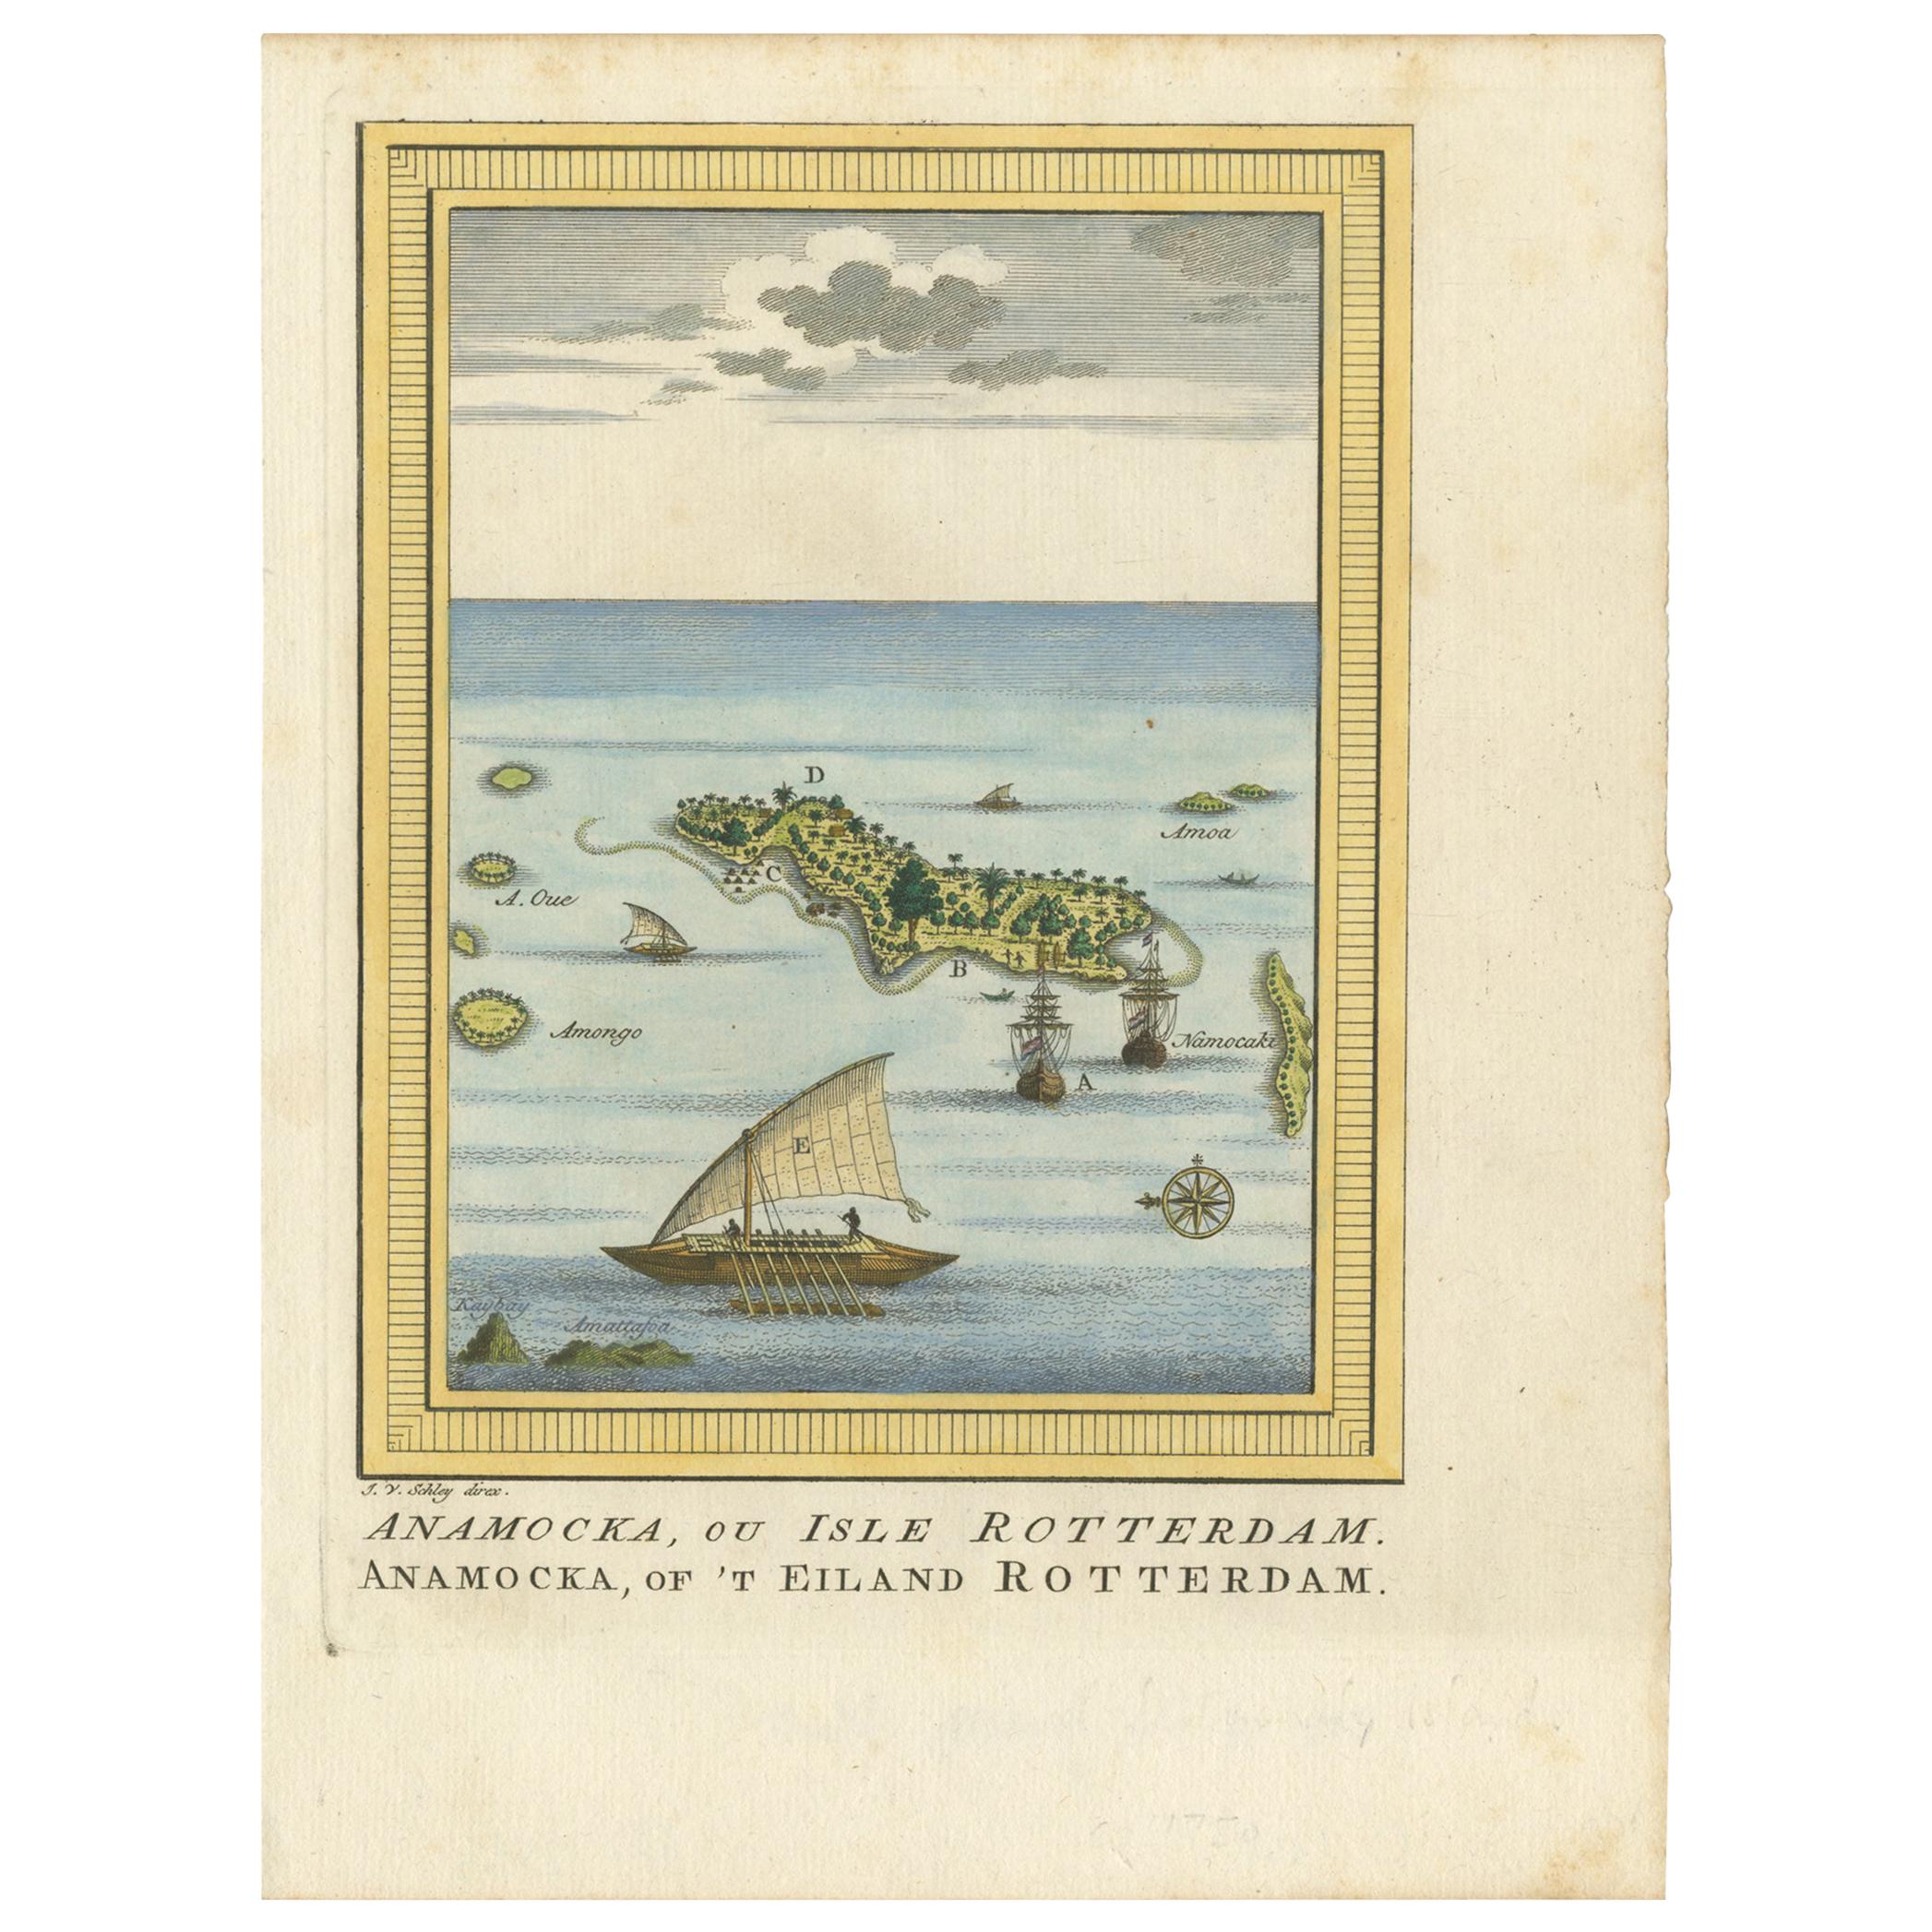 Antique Print of Nomuka Island by Van Schley, '1759'